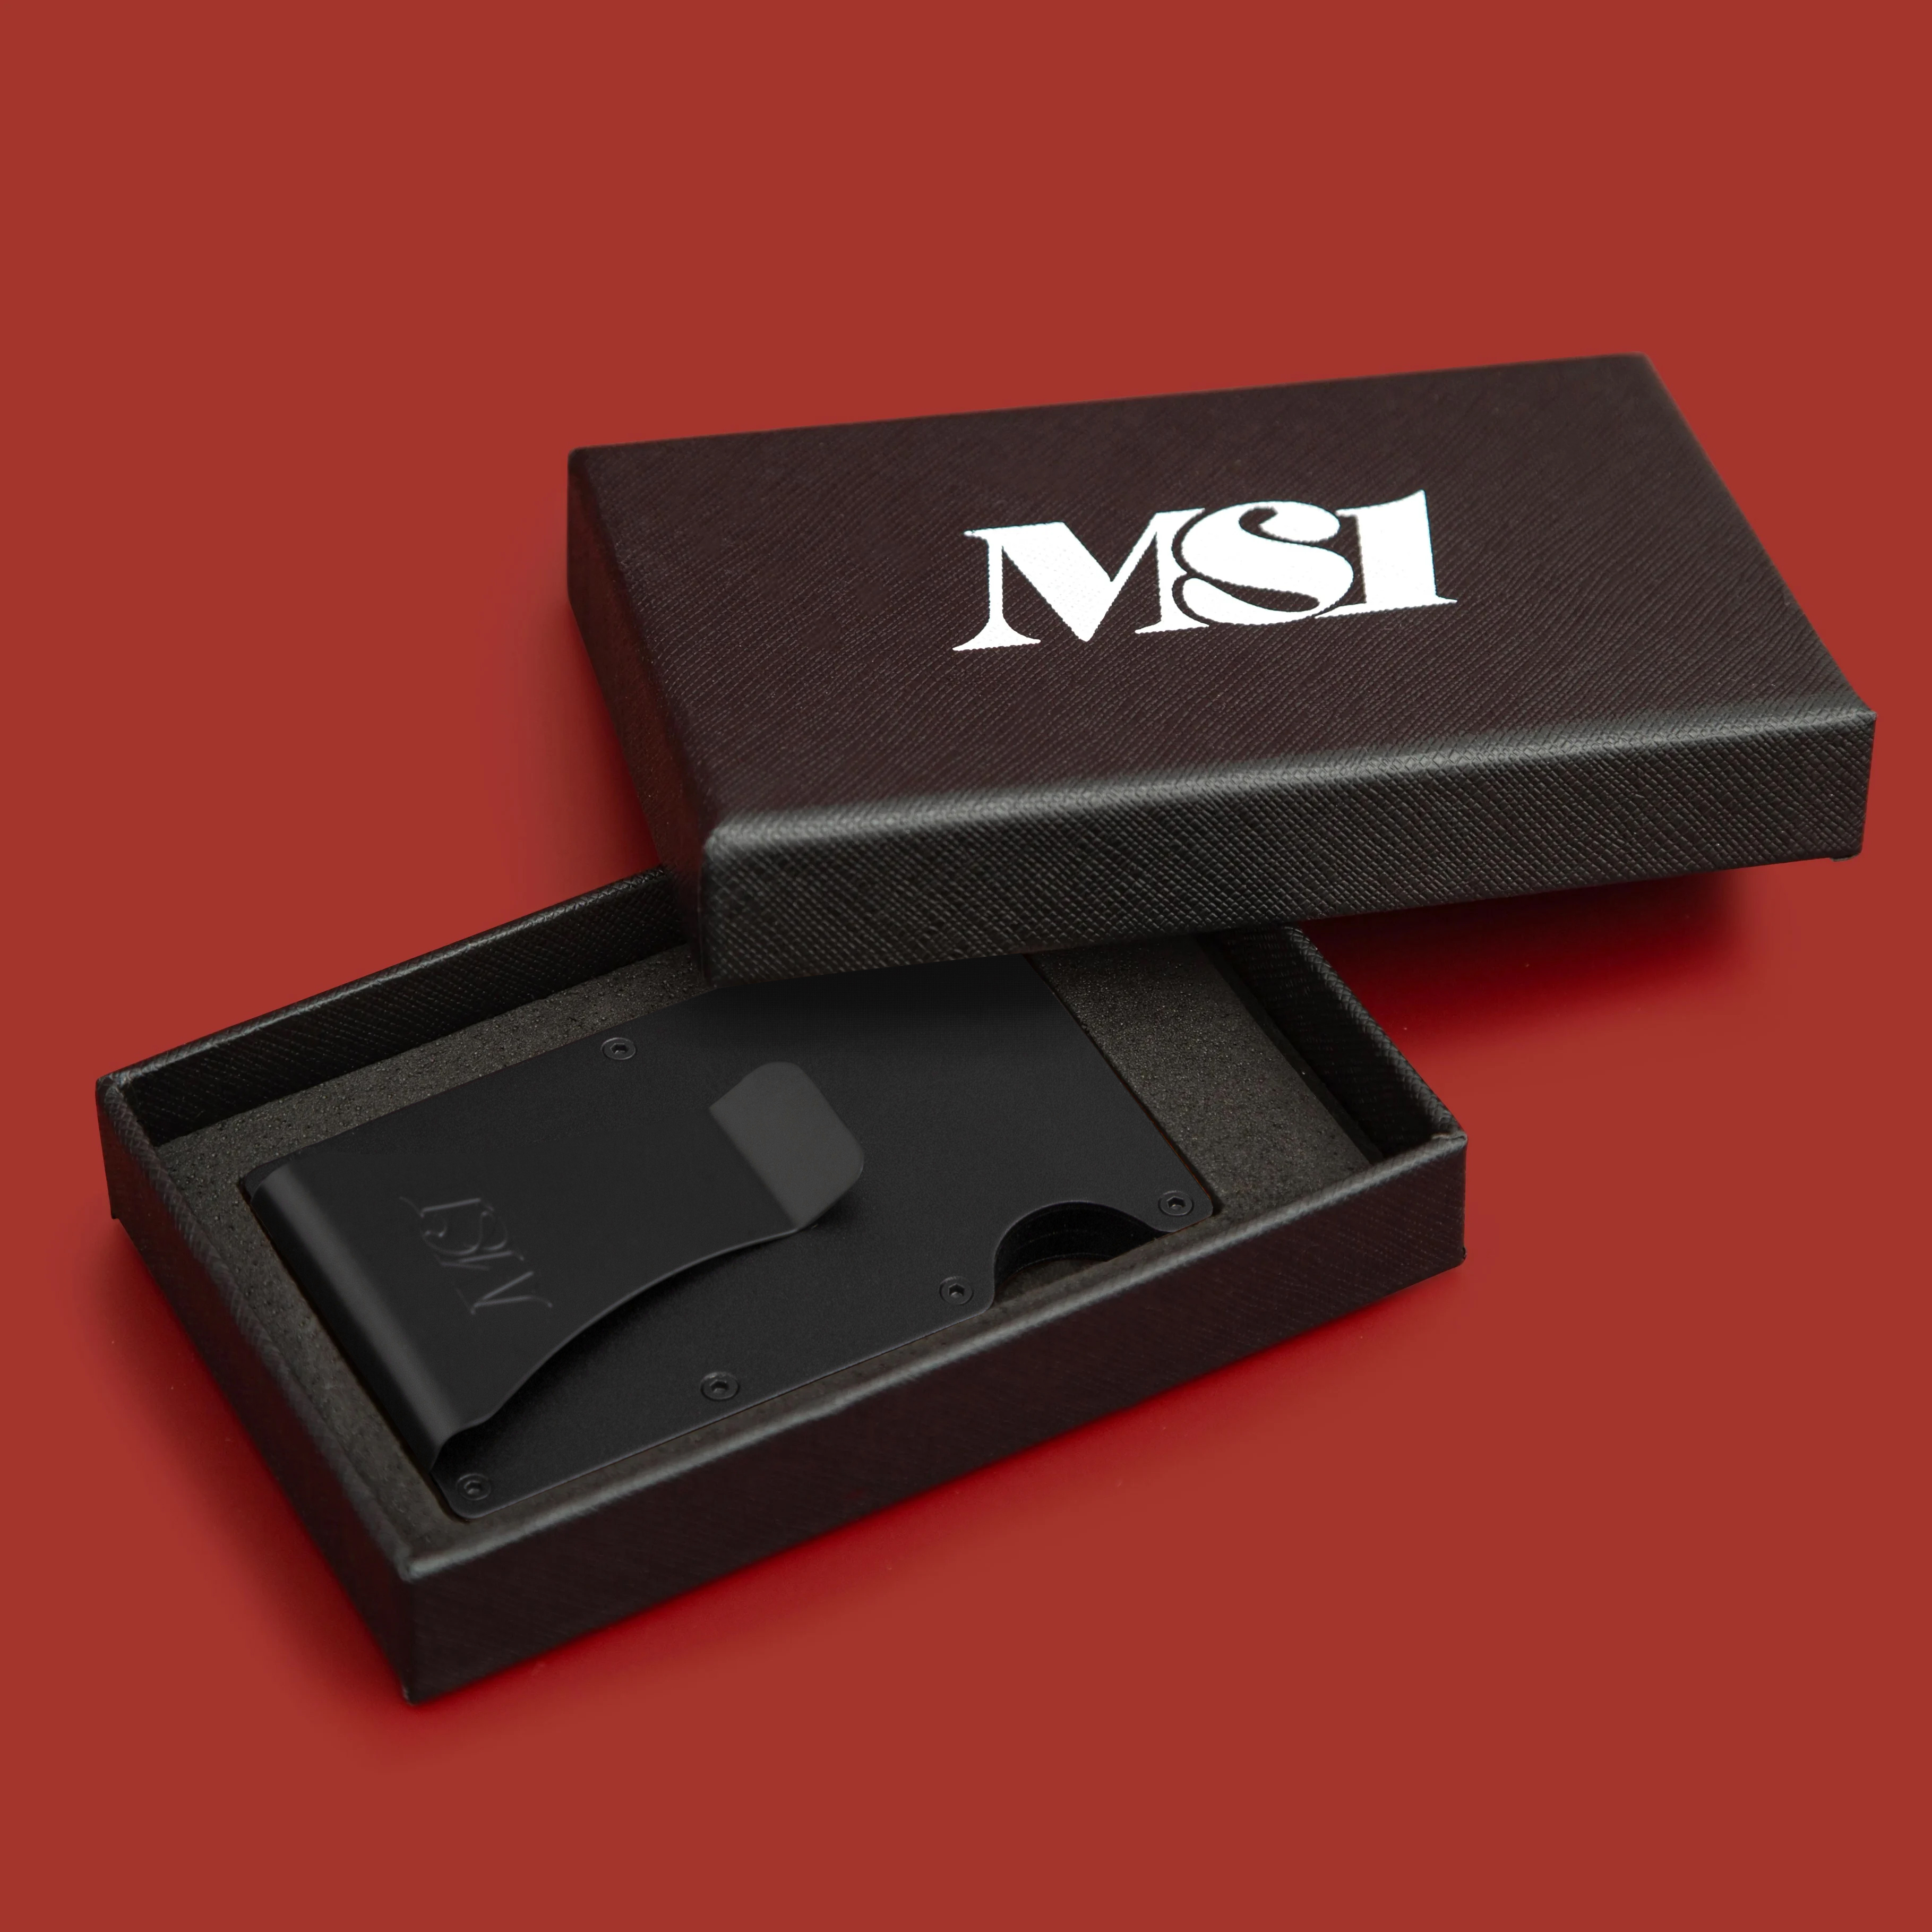 MS1 RFID Blocking Minimalist Black Aluminum Metal Wallet, Card Holder & Money Clip